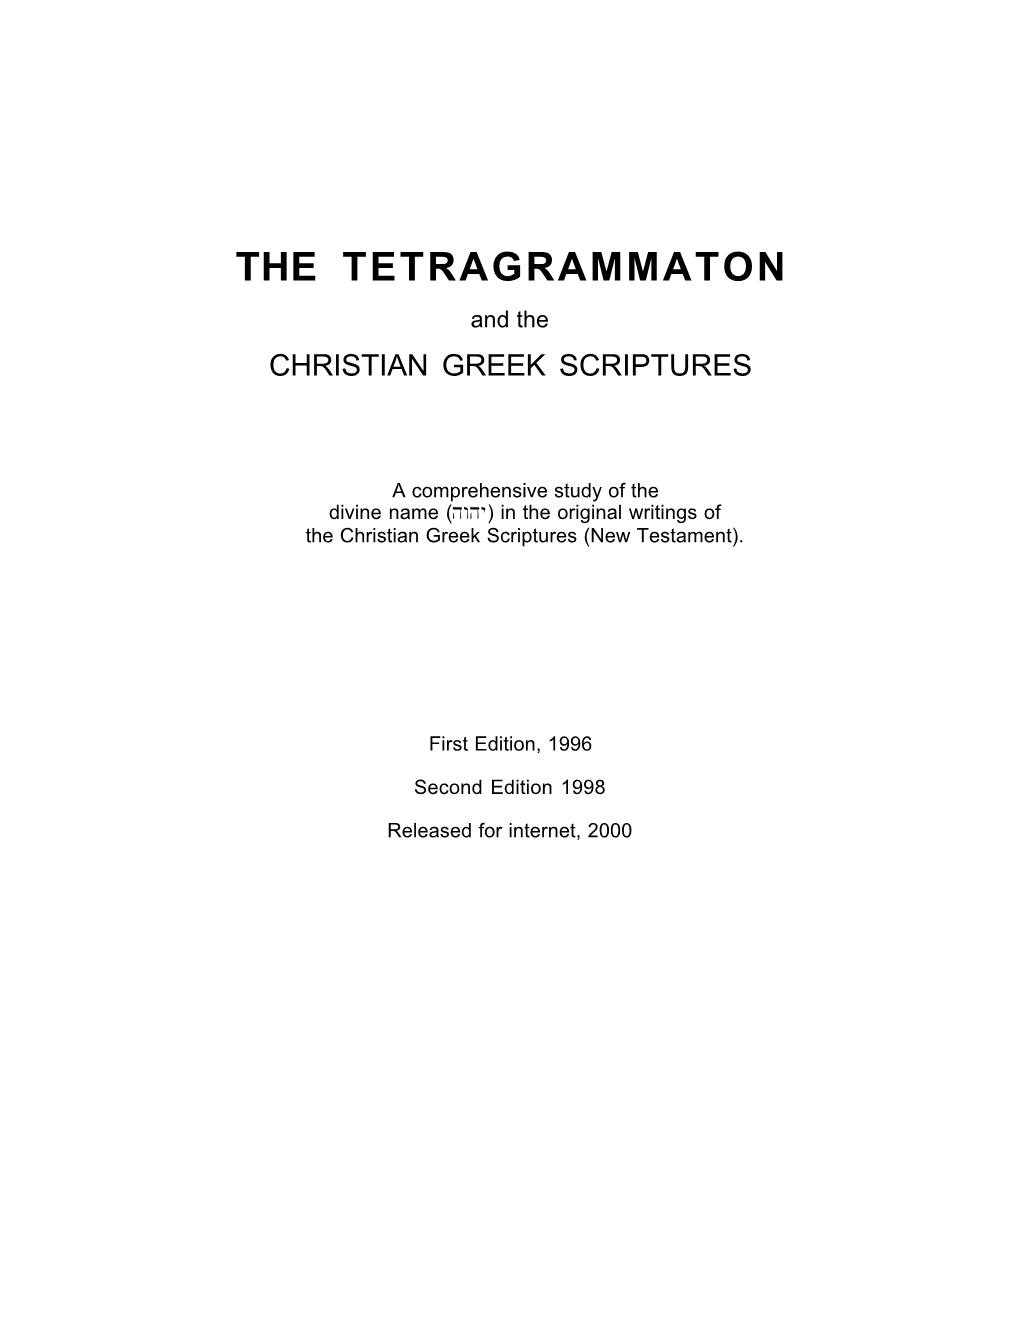 THE TETRAGRAMMATON and the CHRISTIAN GREEK SCRIPTURES